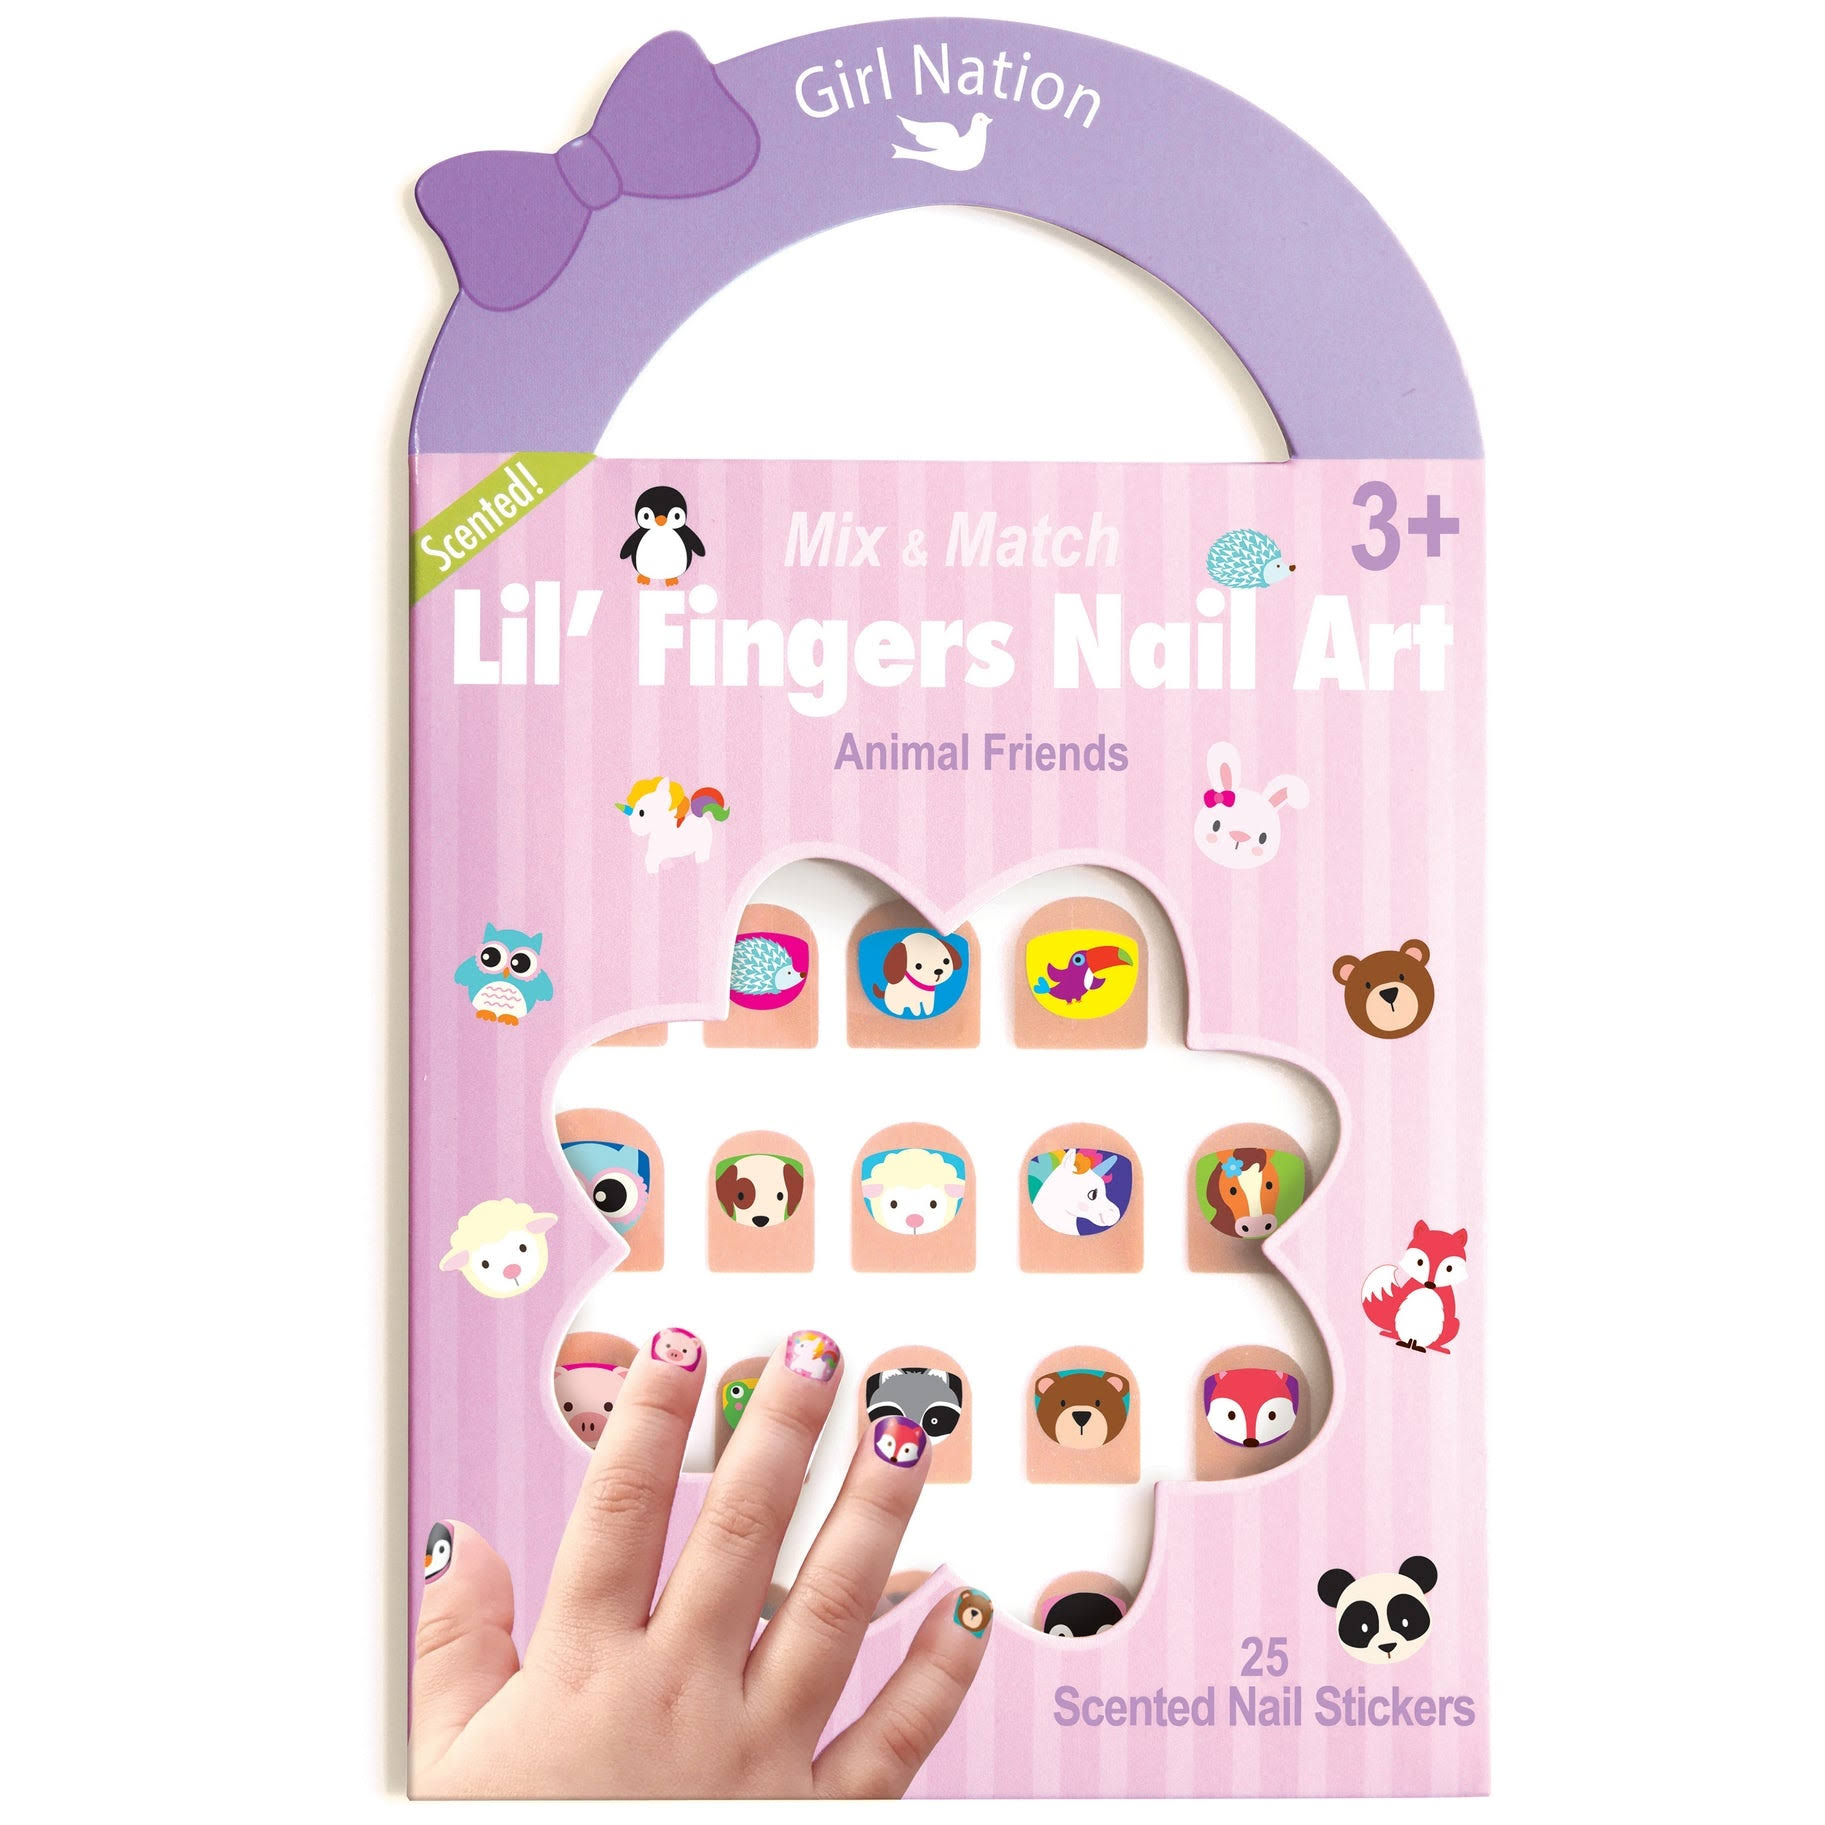 Lil' Fingers Animal Friends Nail Art